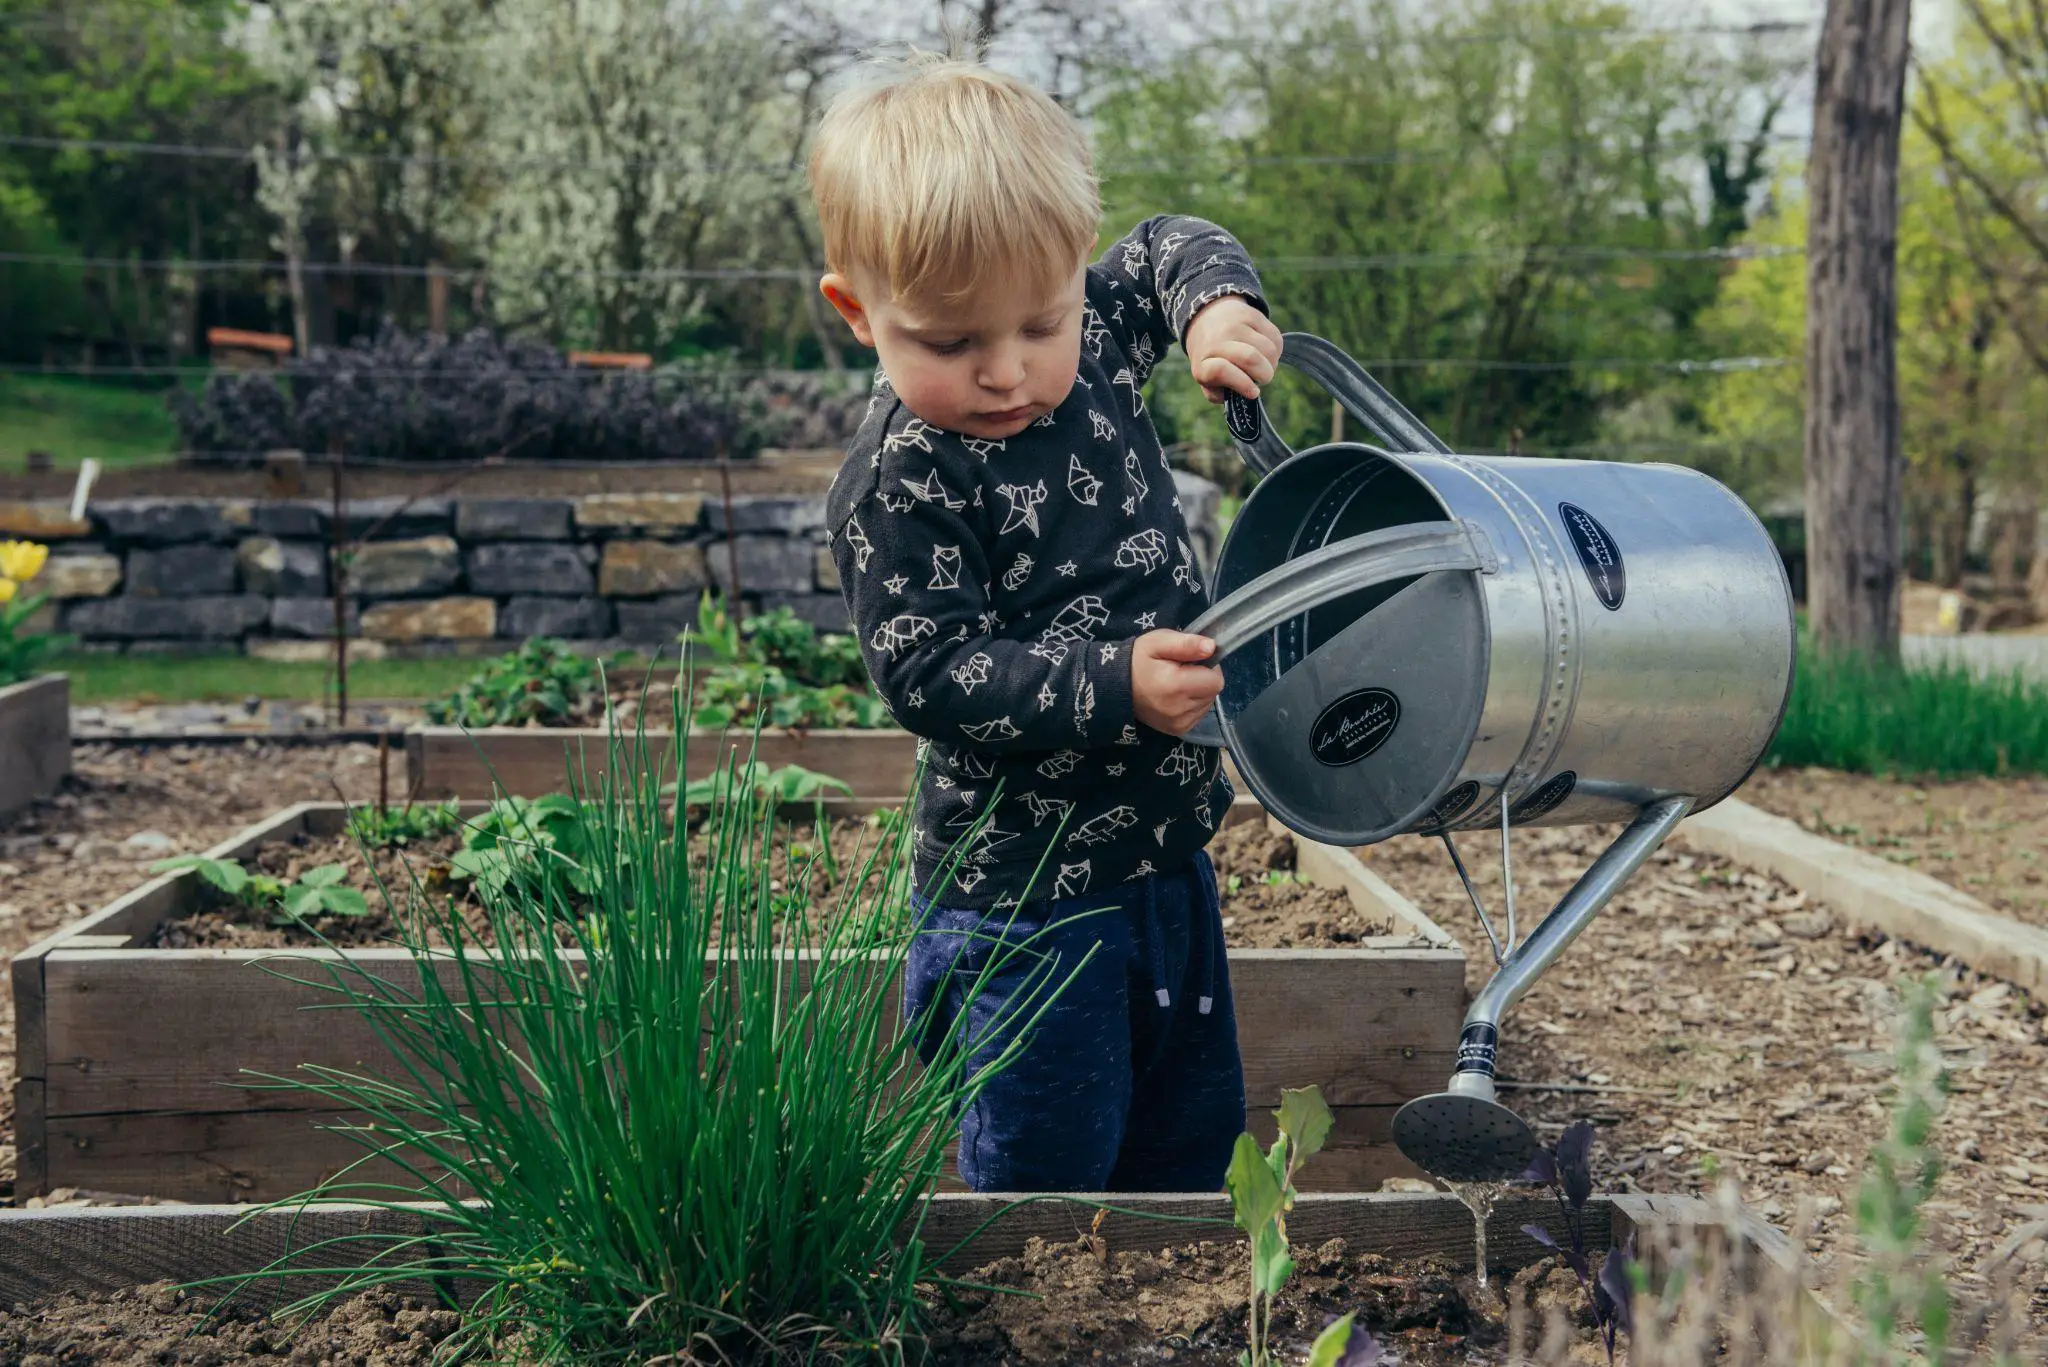 Boy watering a mini garden - DIY kid gardening projects - Babyjourney.net